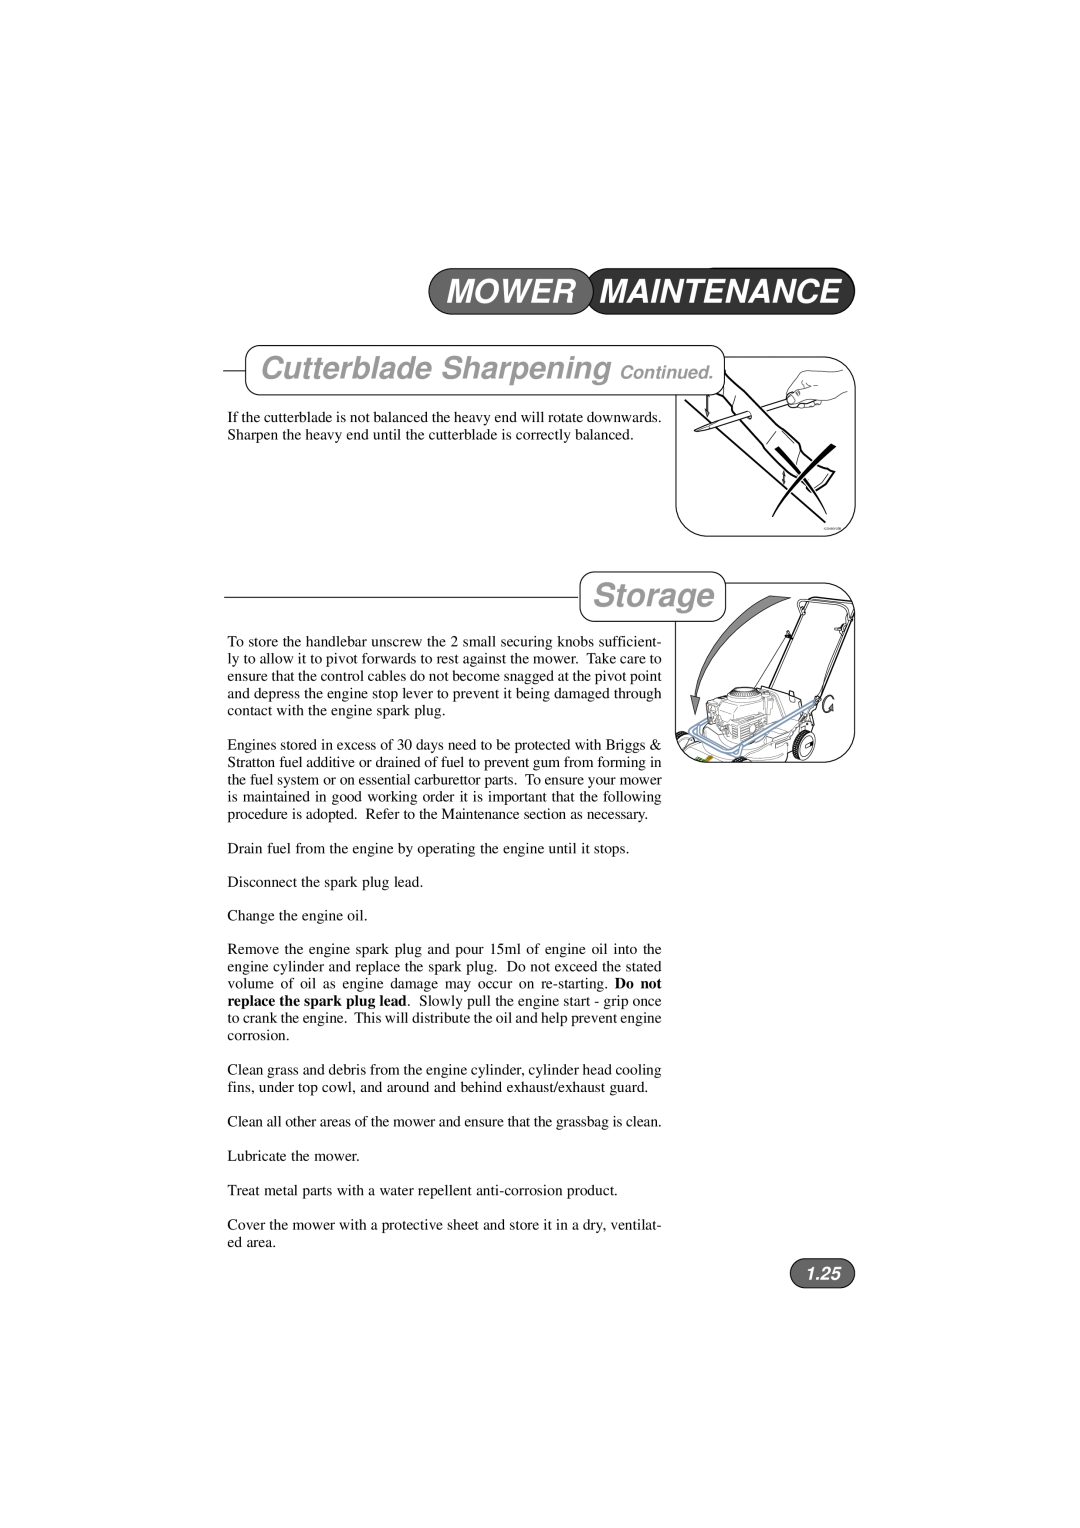 Hayter Mowers 423V, 422V, 424V manual Storage, Cutterblade Sharpening Continued, 1.25, Mower Maintenance 